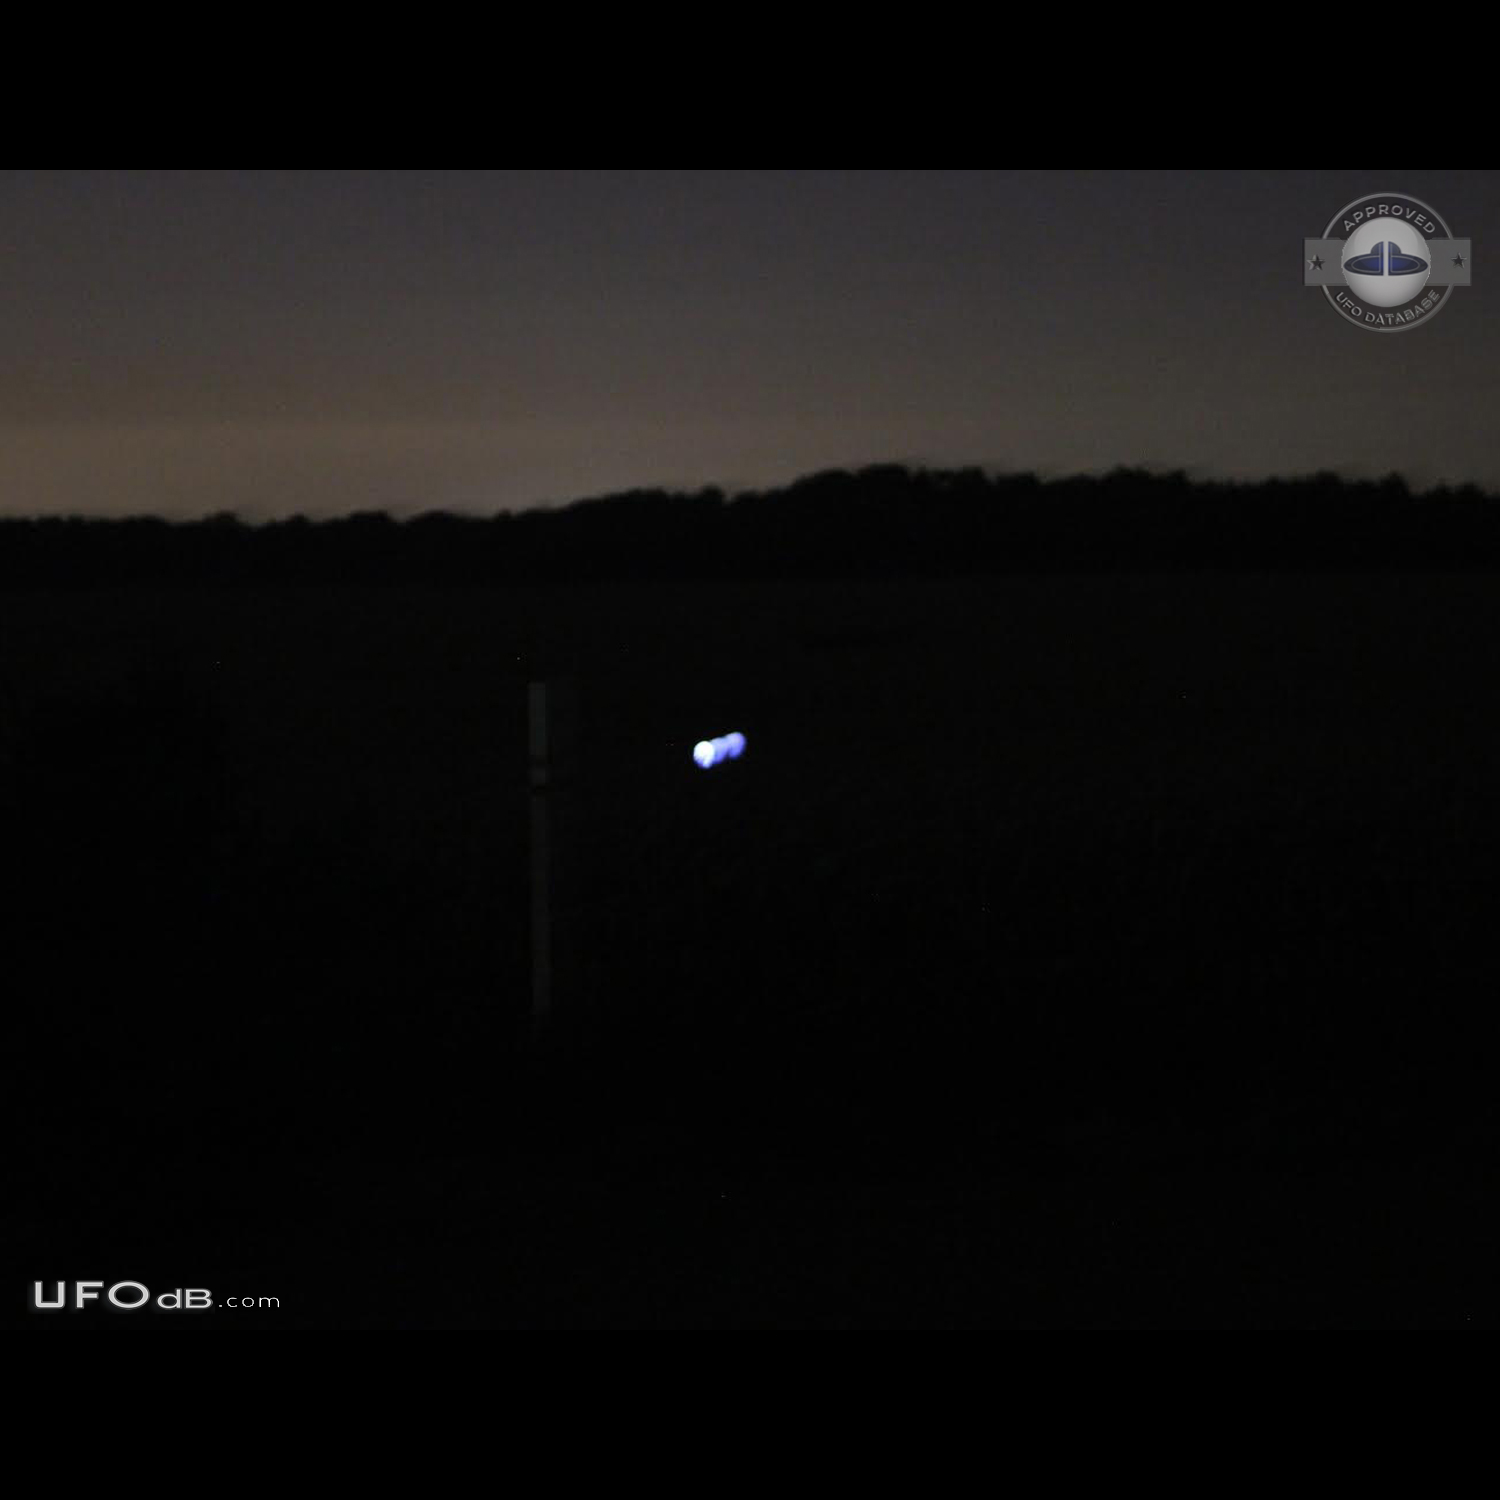 Floating blinking light UFO in the corn field - Lebanon Ohio USA 2014 UFO Picture #690-1